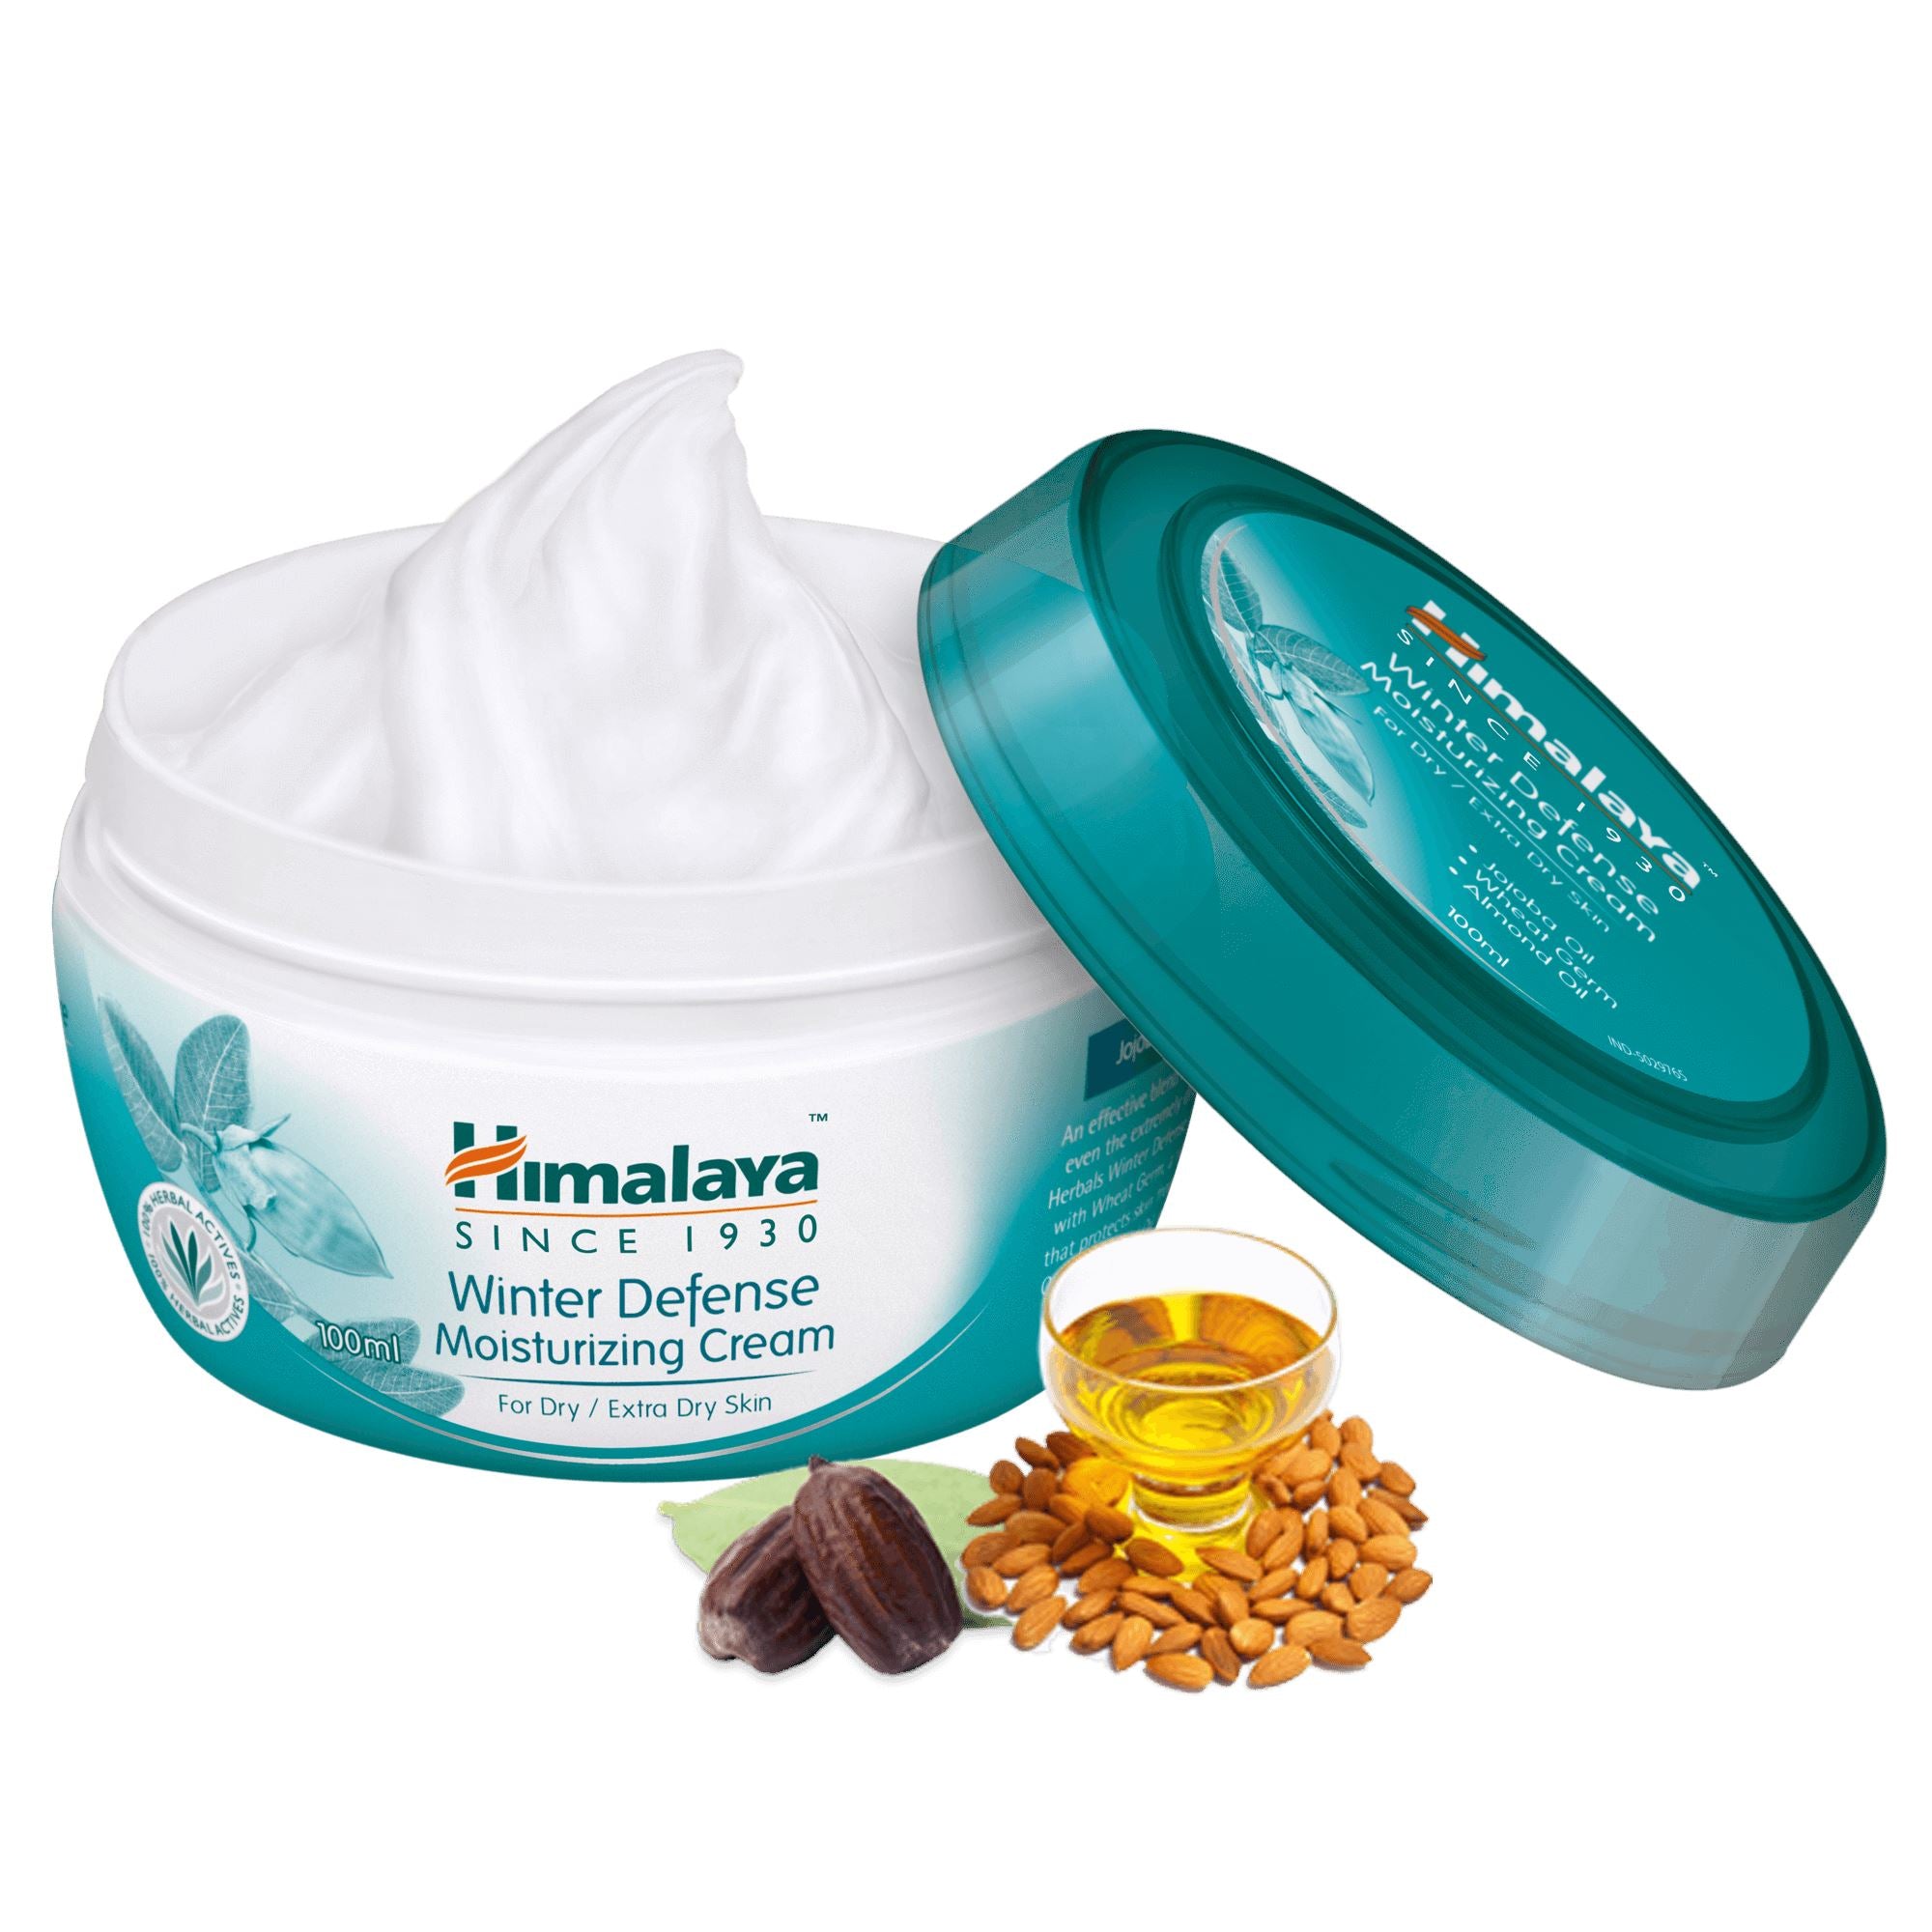 Himalaya Winter Defense Moisturizing Cream - For Dry/Extra Dry Skin